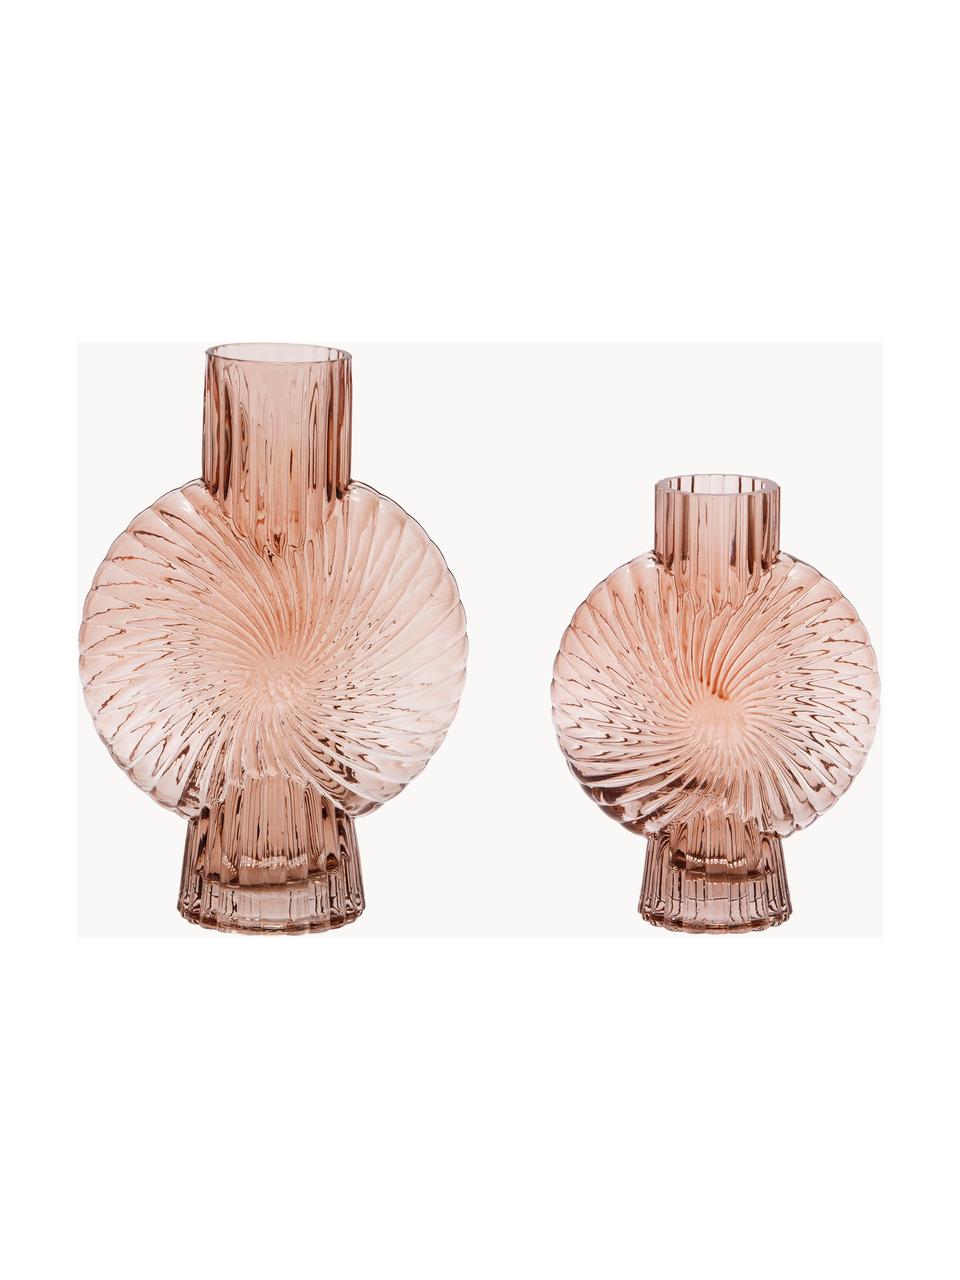 Grosse Design-Vase Galaxy, Glas, Apricot, B 23 x H 32 cm